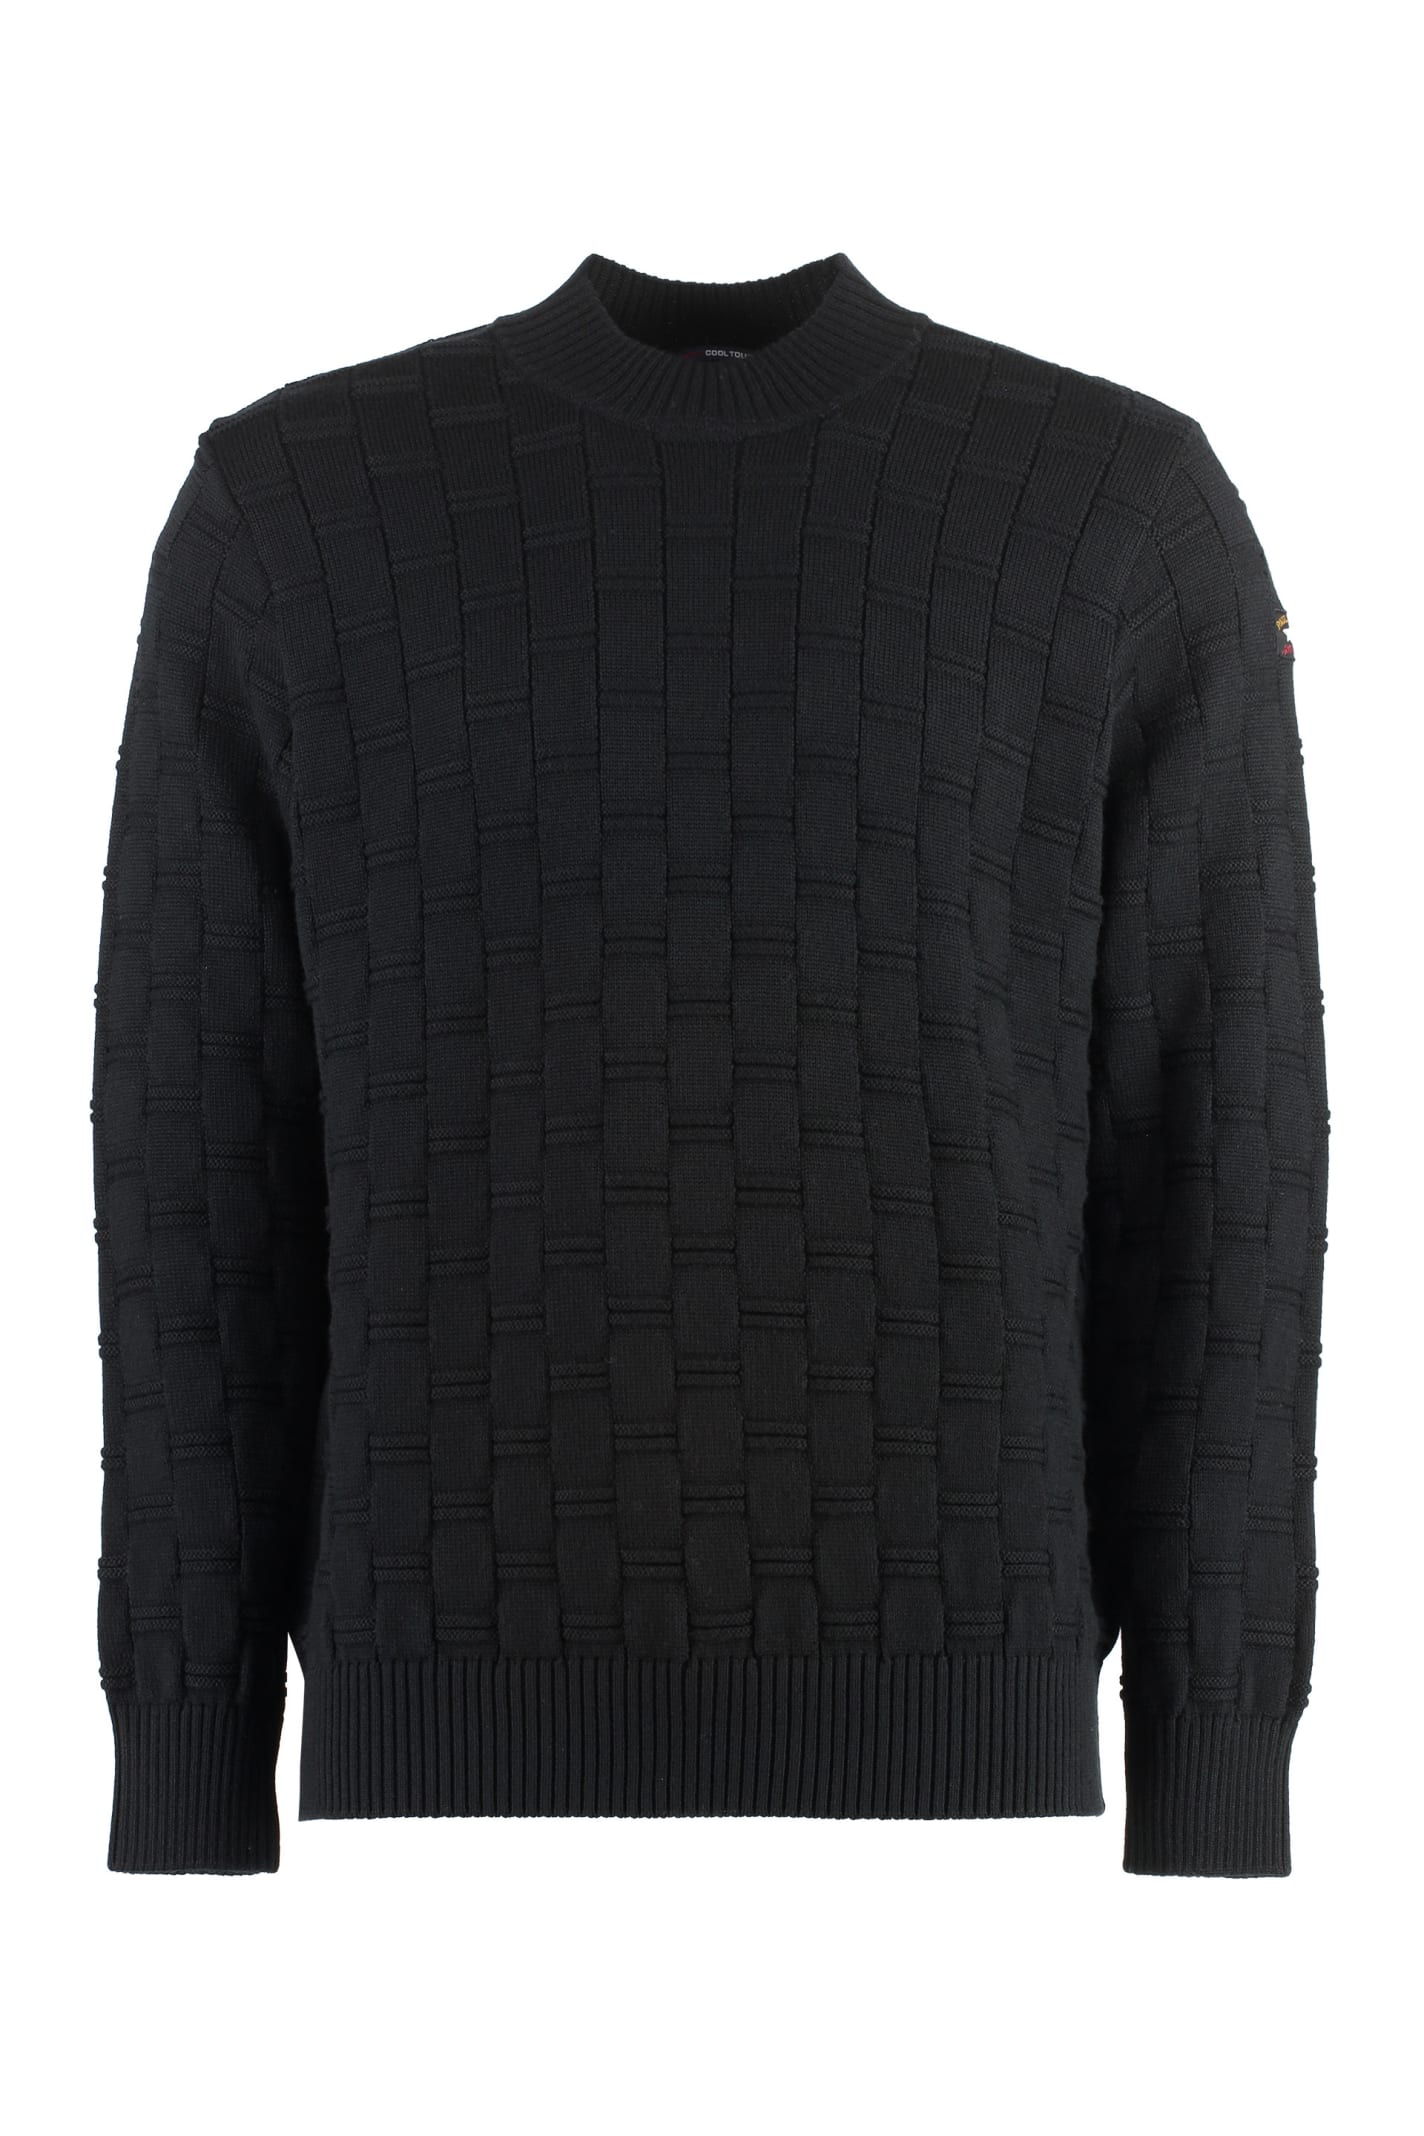 Paul&amp;shark Virgin Wool Crew-neck Sweater In Black